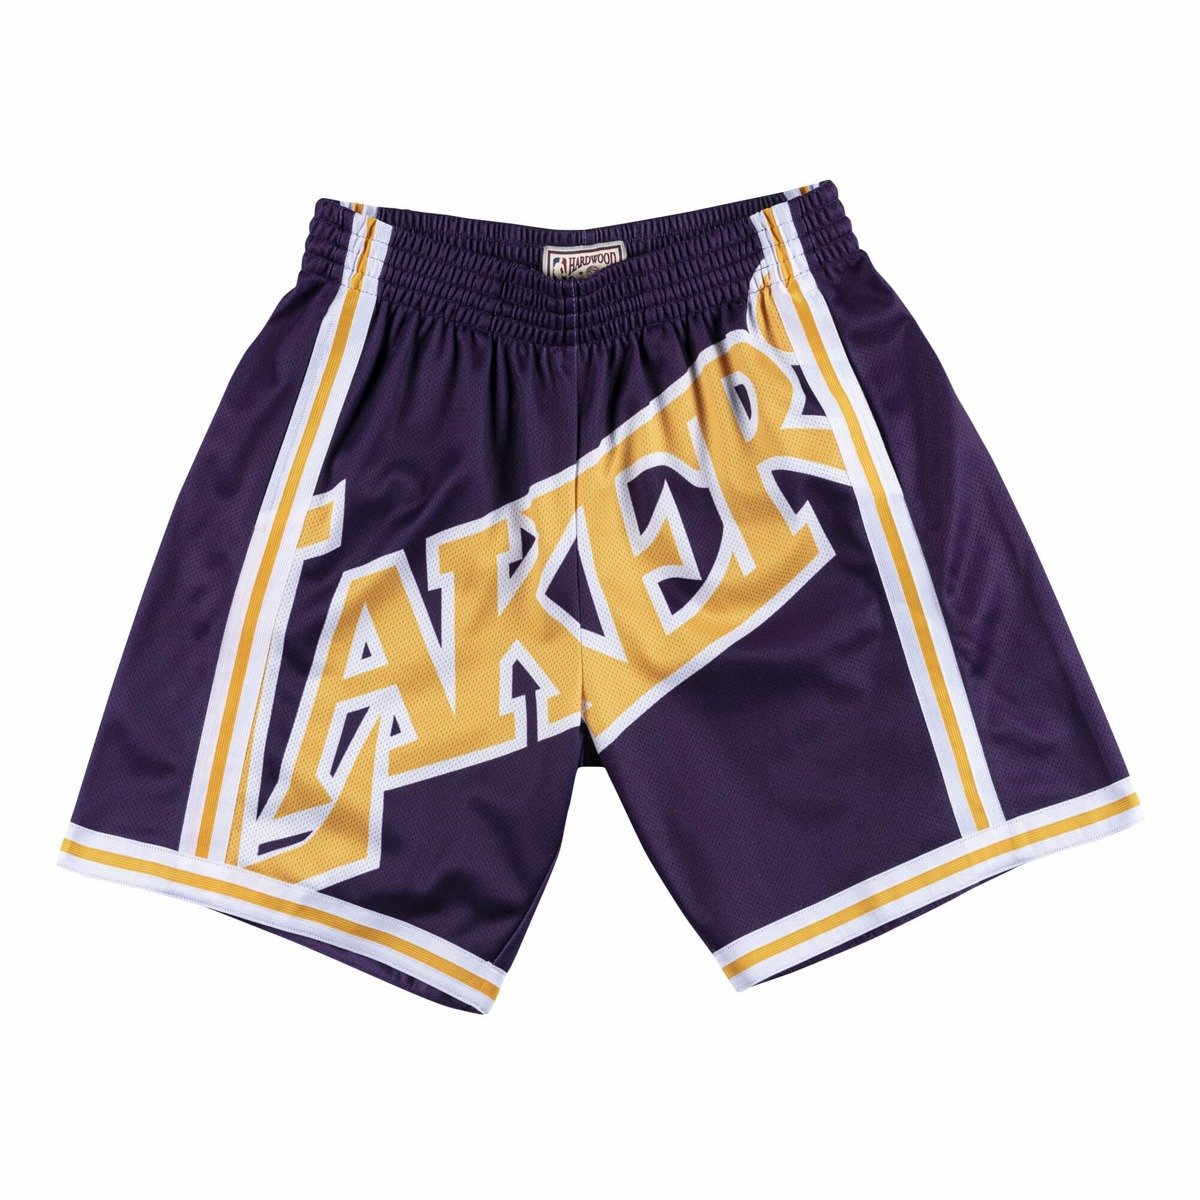 Mitchell & Ness NBA Big Face Short Lakers 96-97 - SHORBW19069-LALPURP96 ...